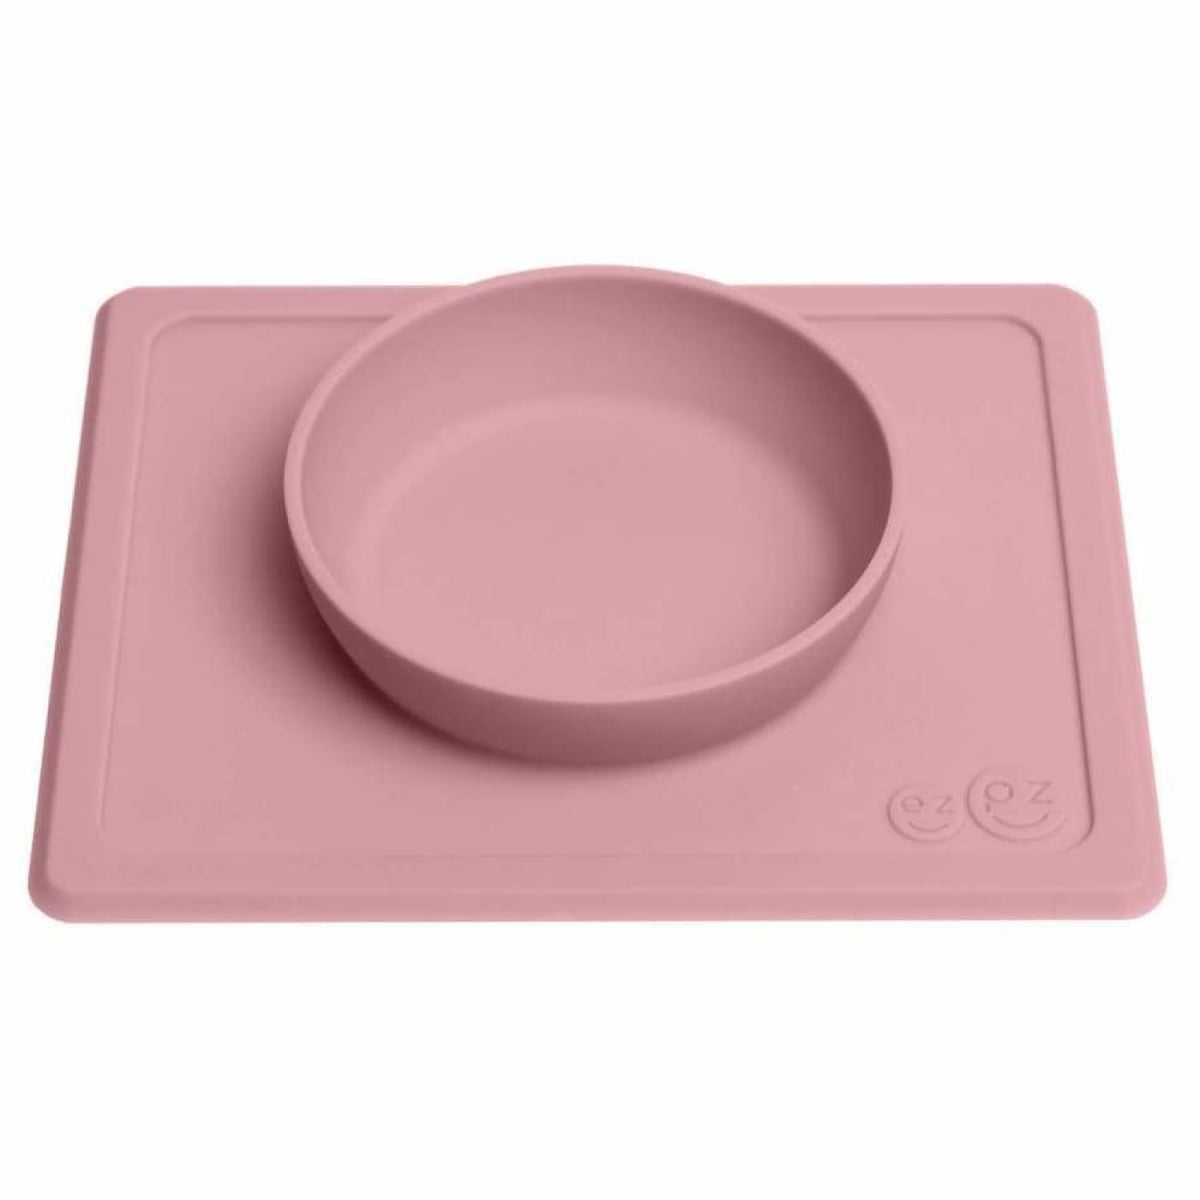 EZPZ Mini Bowl - Blush - Blush - NURSING &amp; FEEDING - CUTLERY/PLATES/BOWLS/TOYS